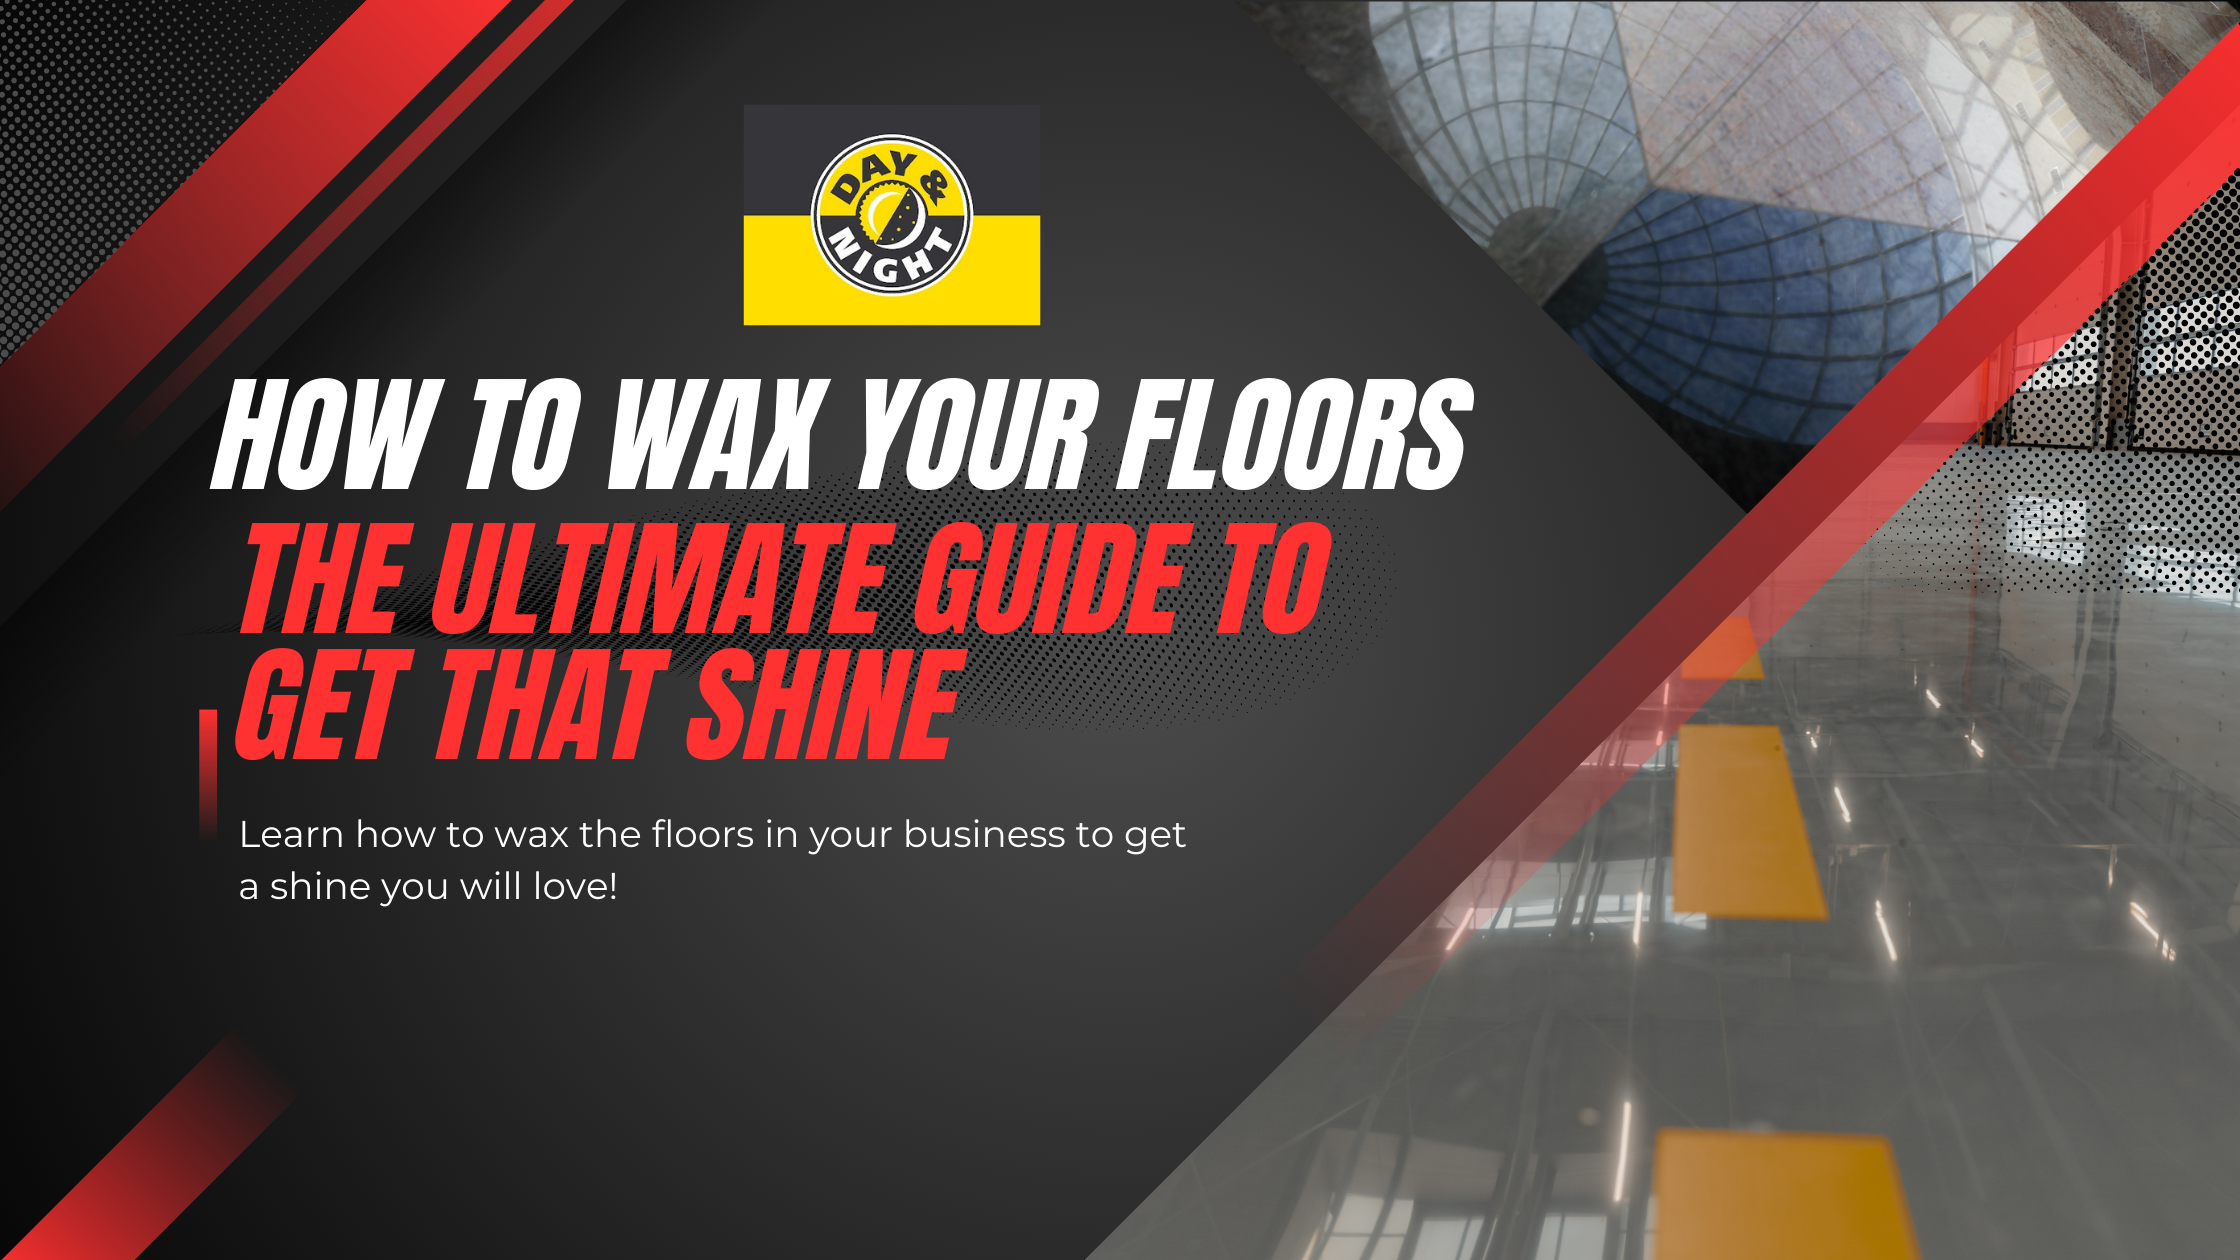 How to wax floors